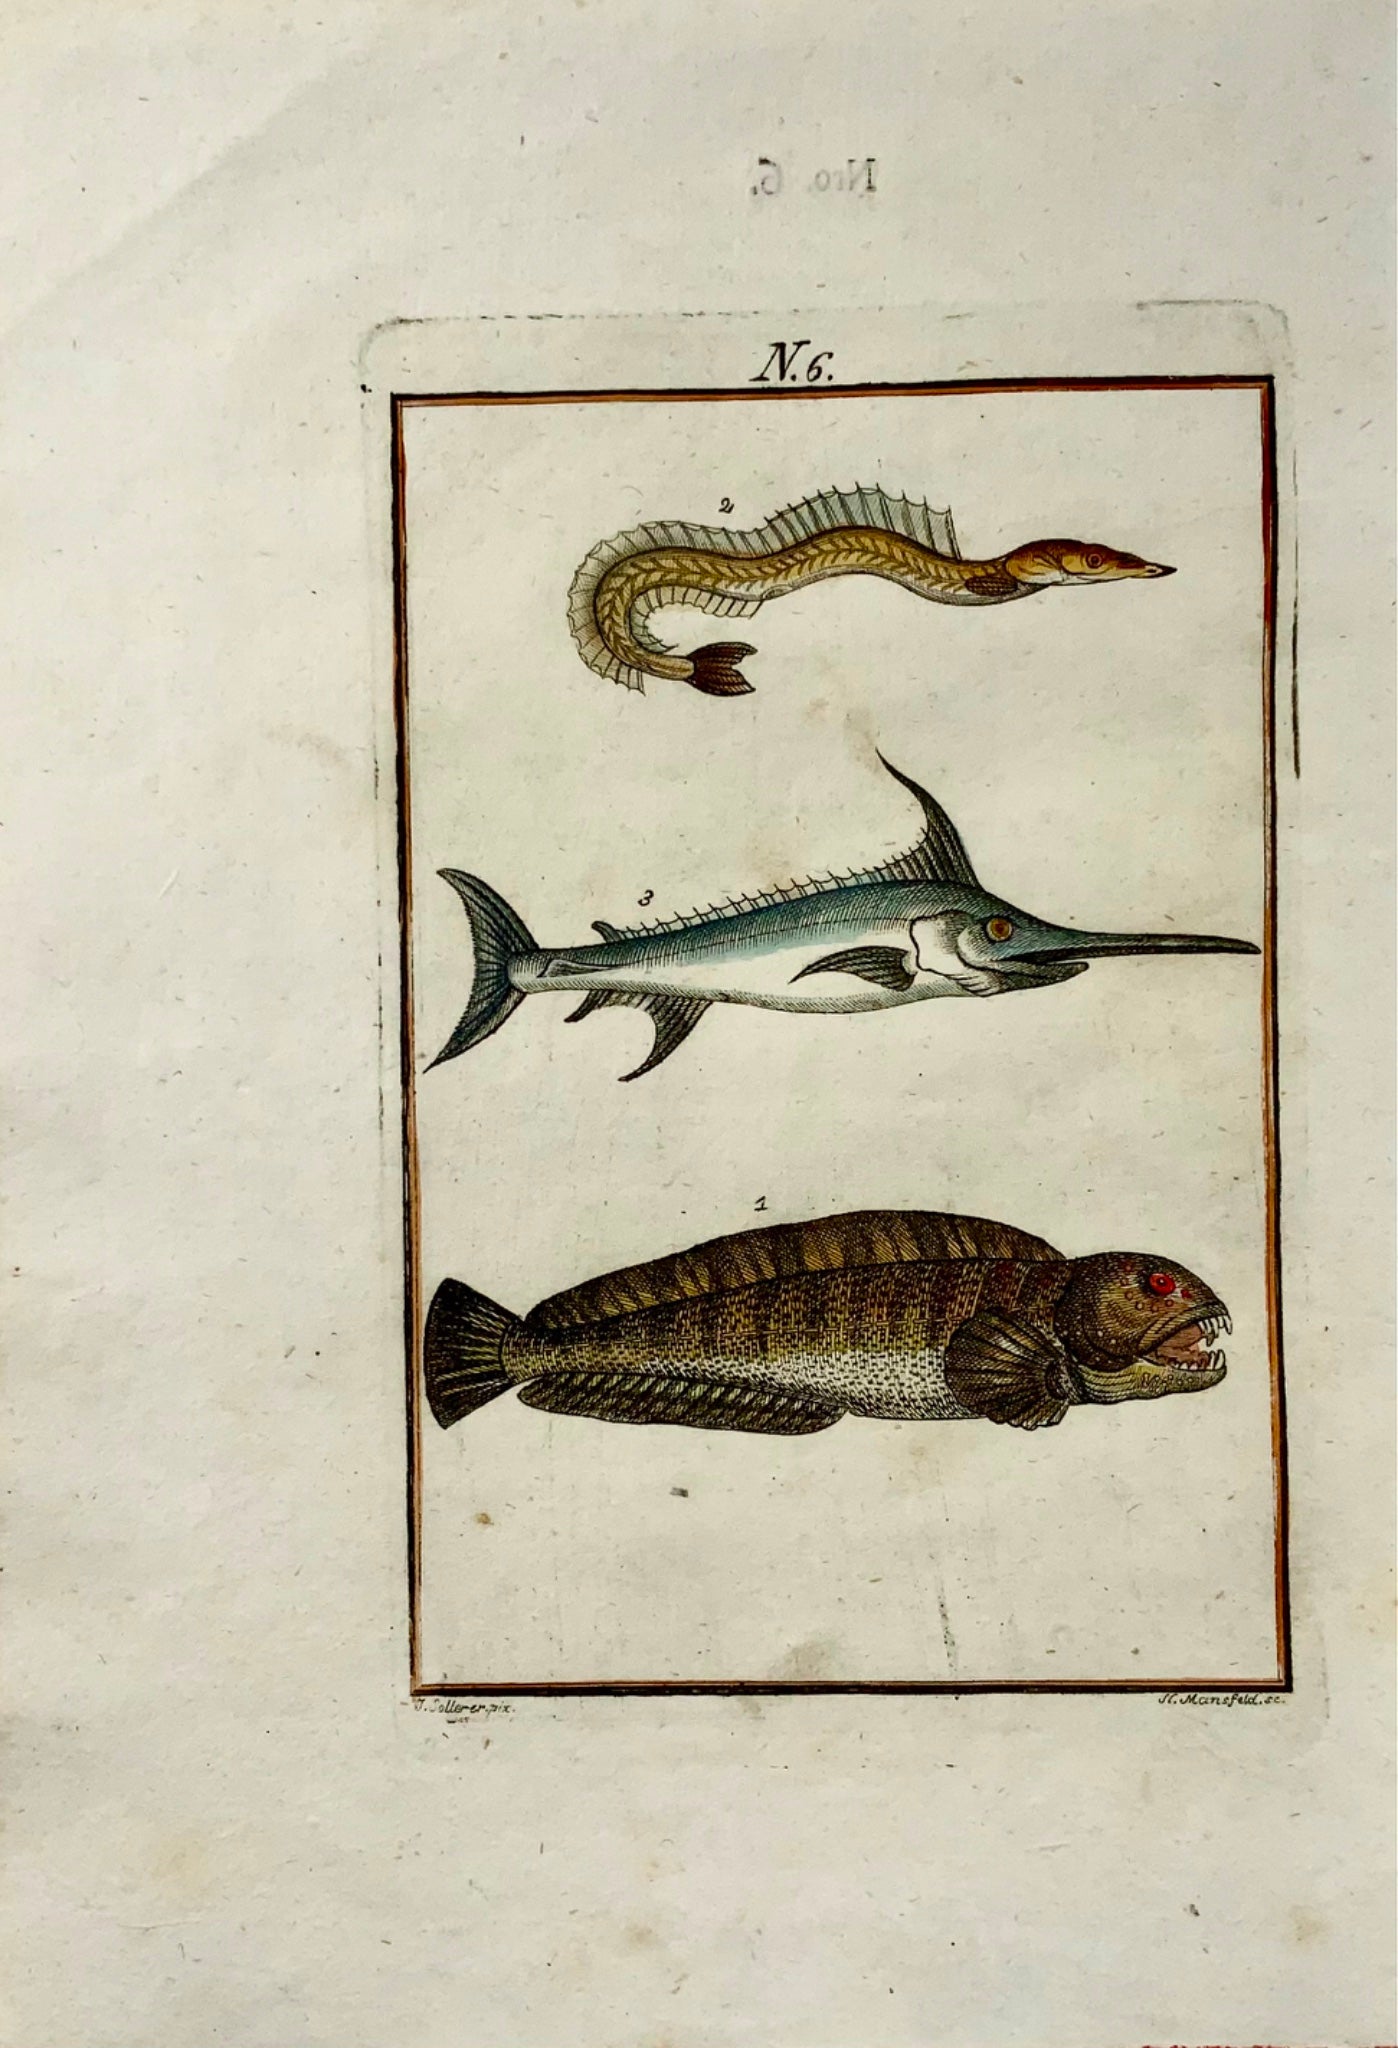 1790 Pesce lupo, Pesce spada, Joh. Sollerer, incisione colorata a mano